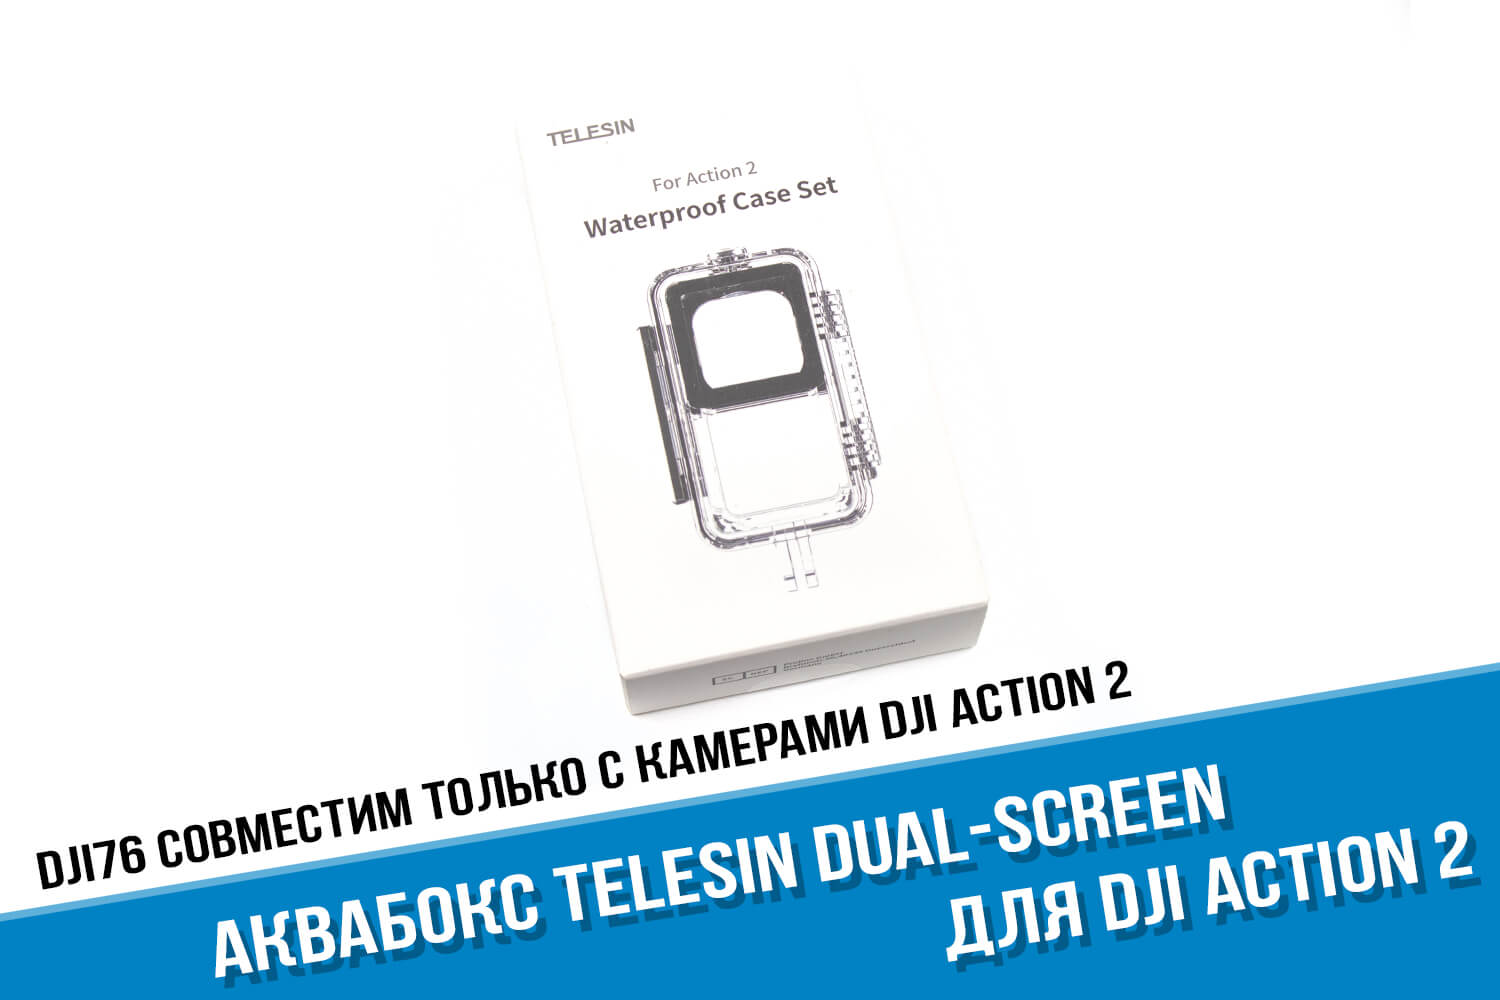 Аквабокс для DJI Action 2 Dual-Screen компании Telesin